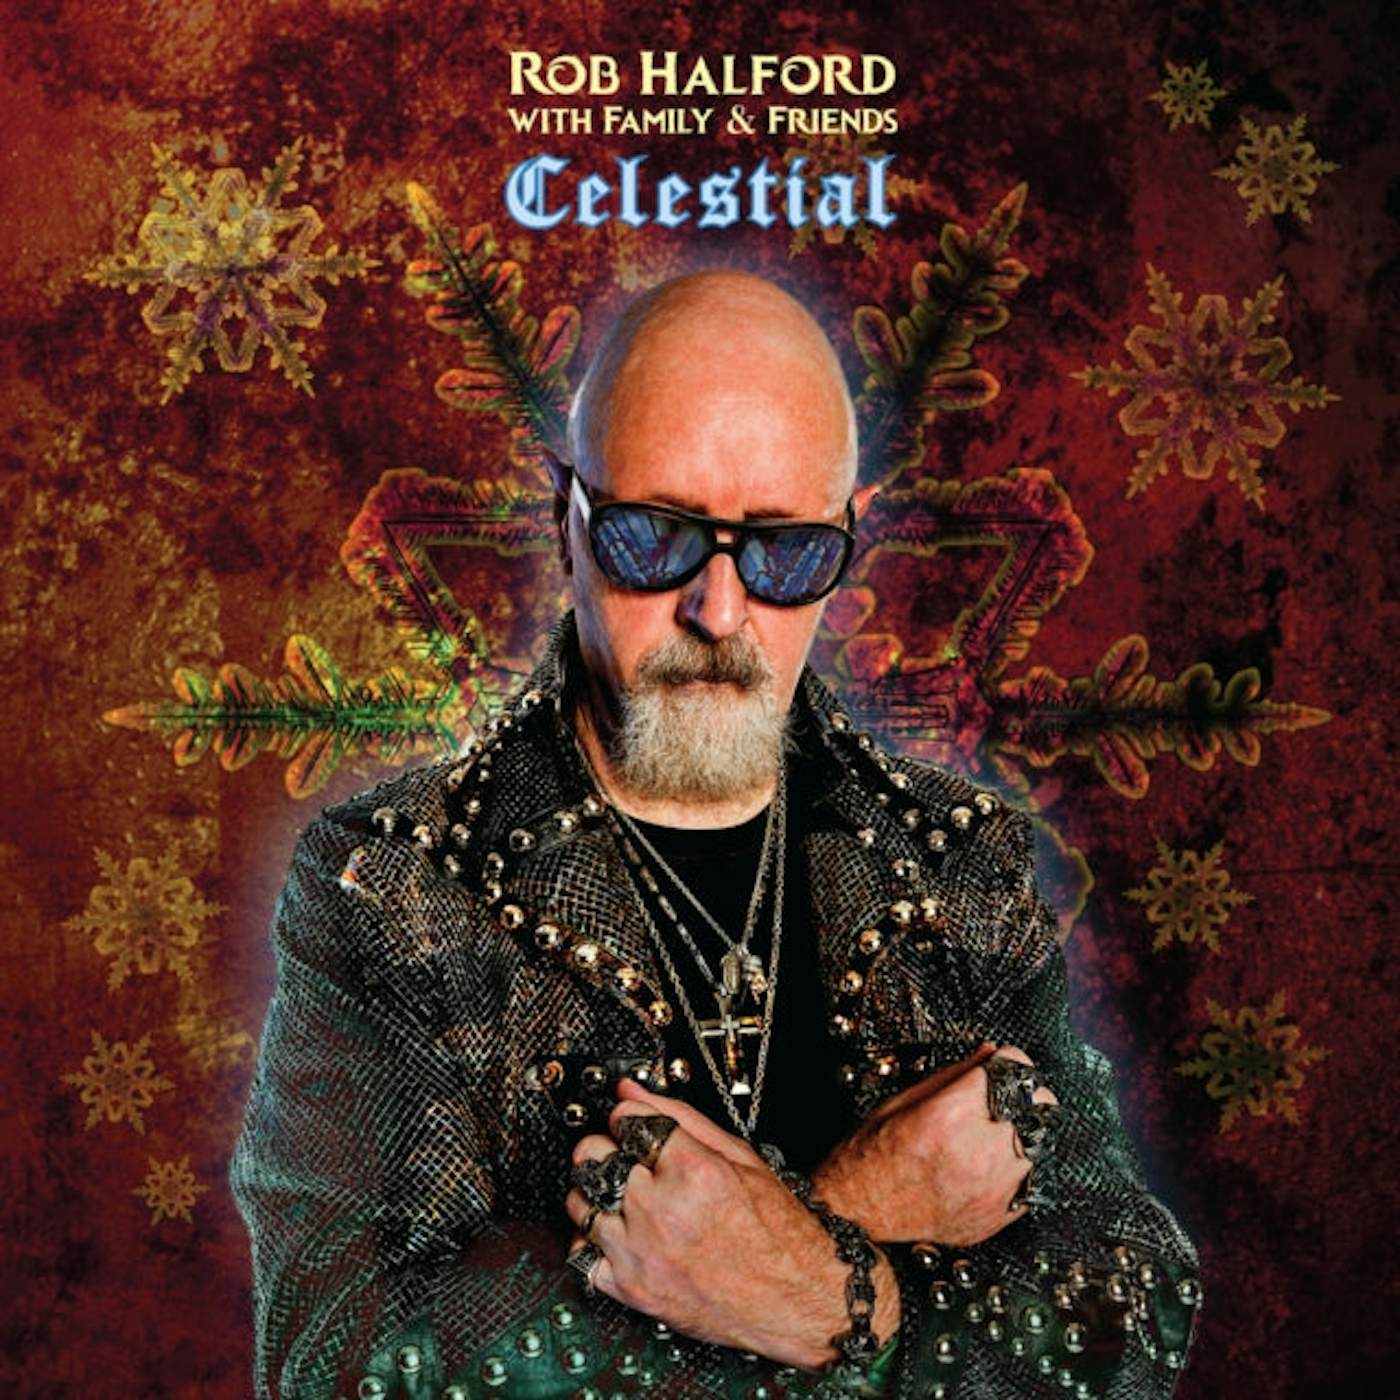 Rob Halford LP Vinyl Record - Celestial